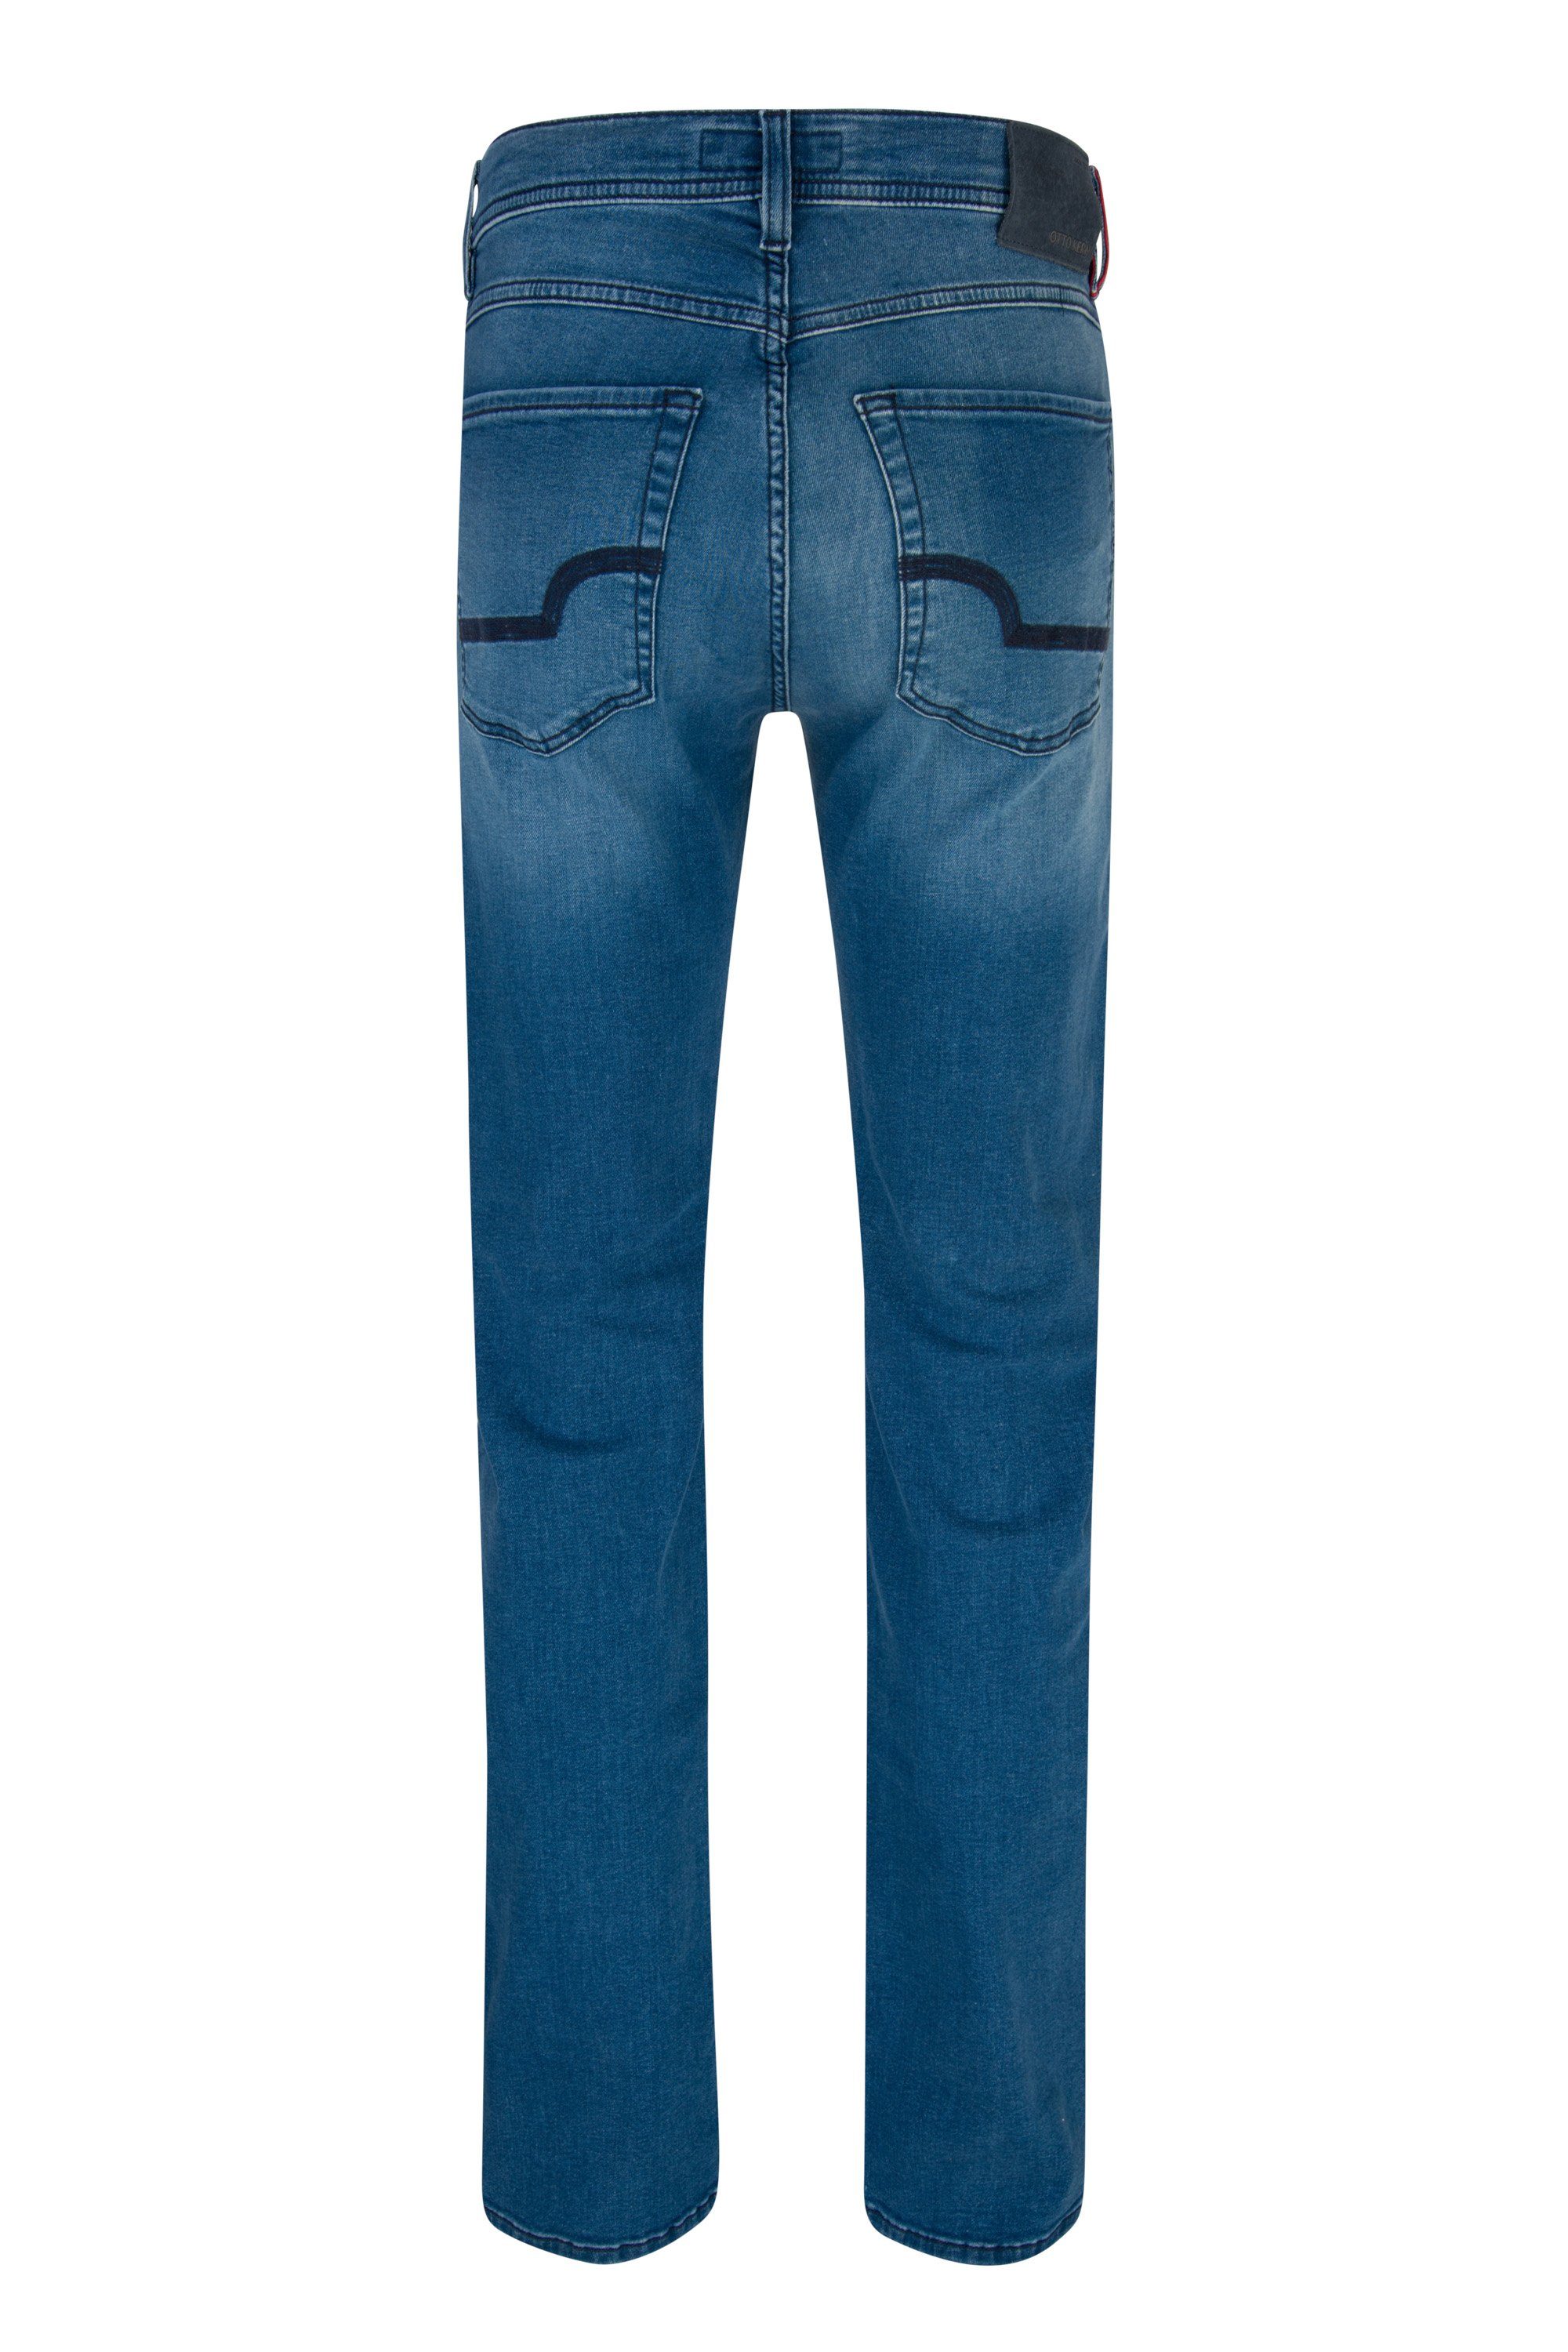 wash mid 5-Pocket-Jeans Pure blue - JOHN Kern 67041 OTTO Dynamic KERN Stret used 6816.6824